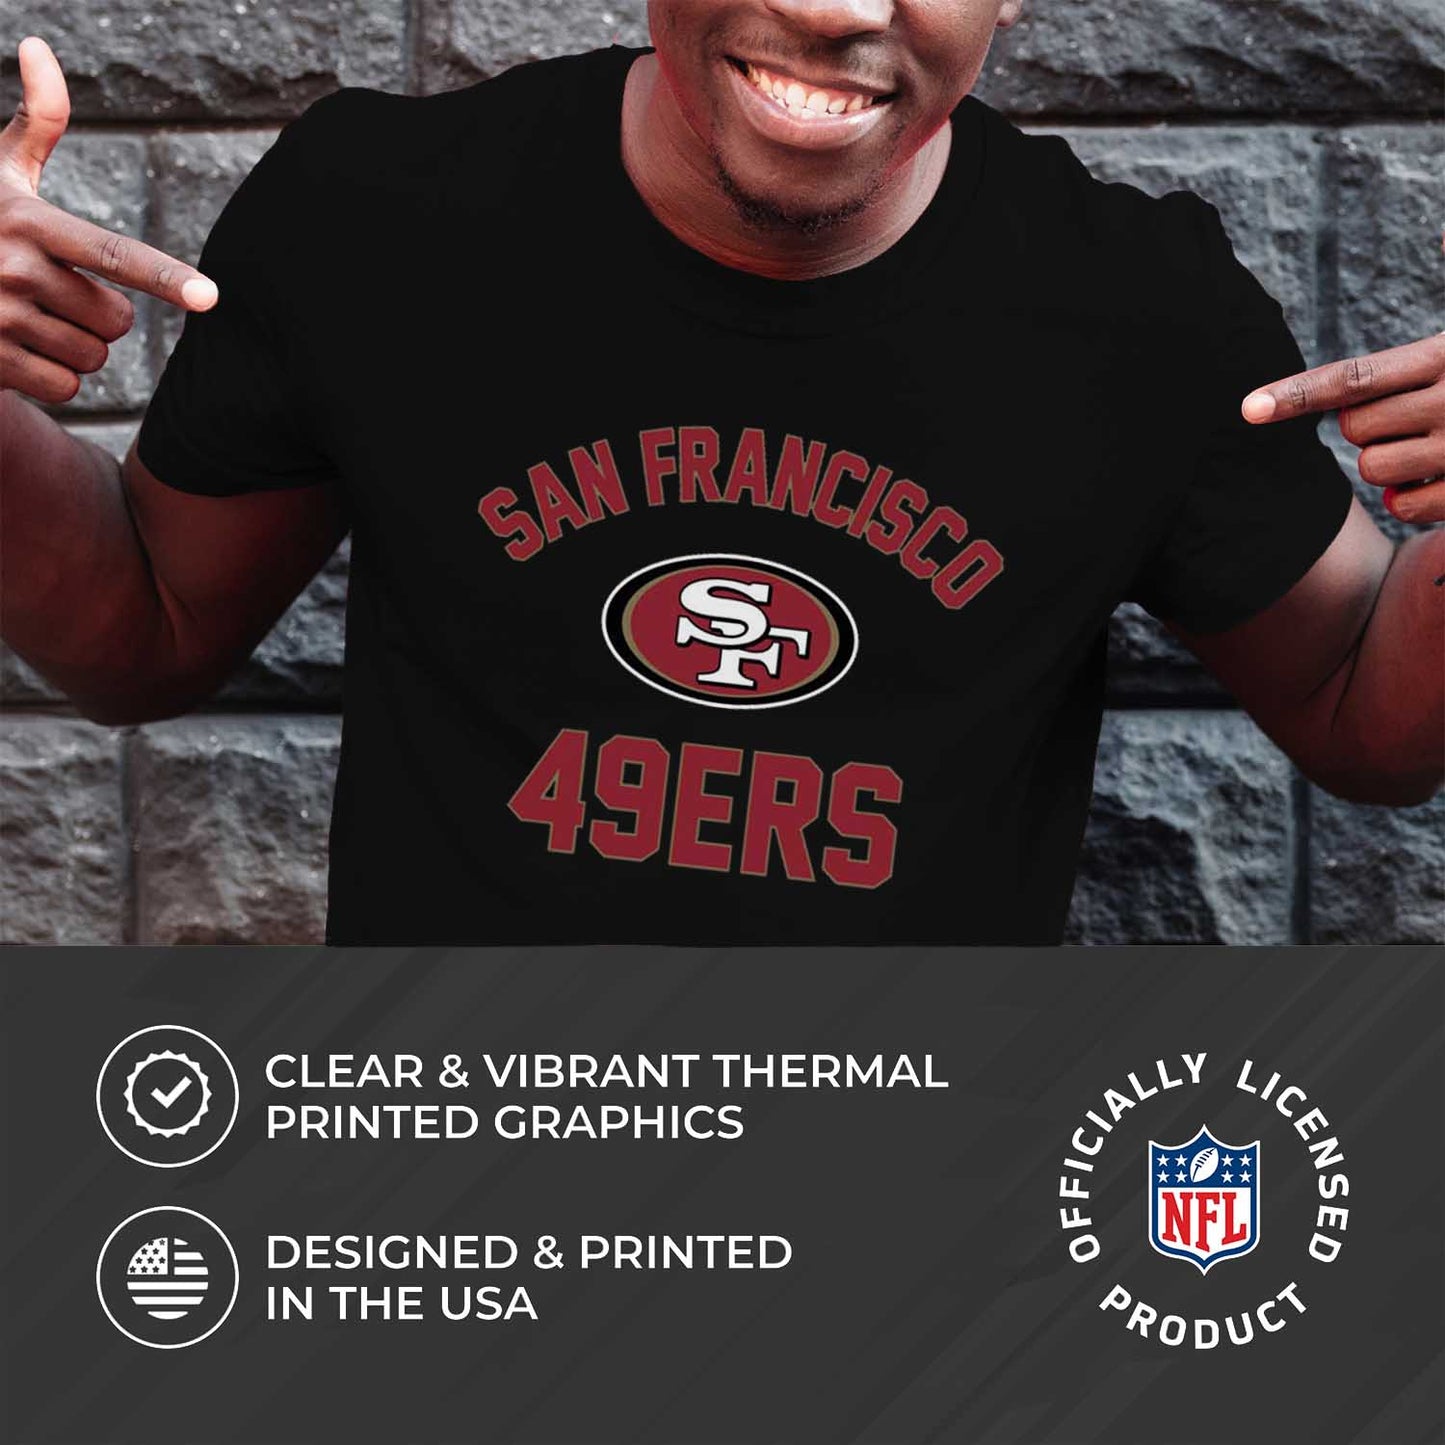 San Francisco 49ers NFL Adult Gameday T-Shirt - Black